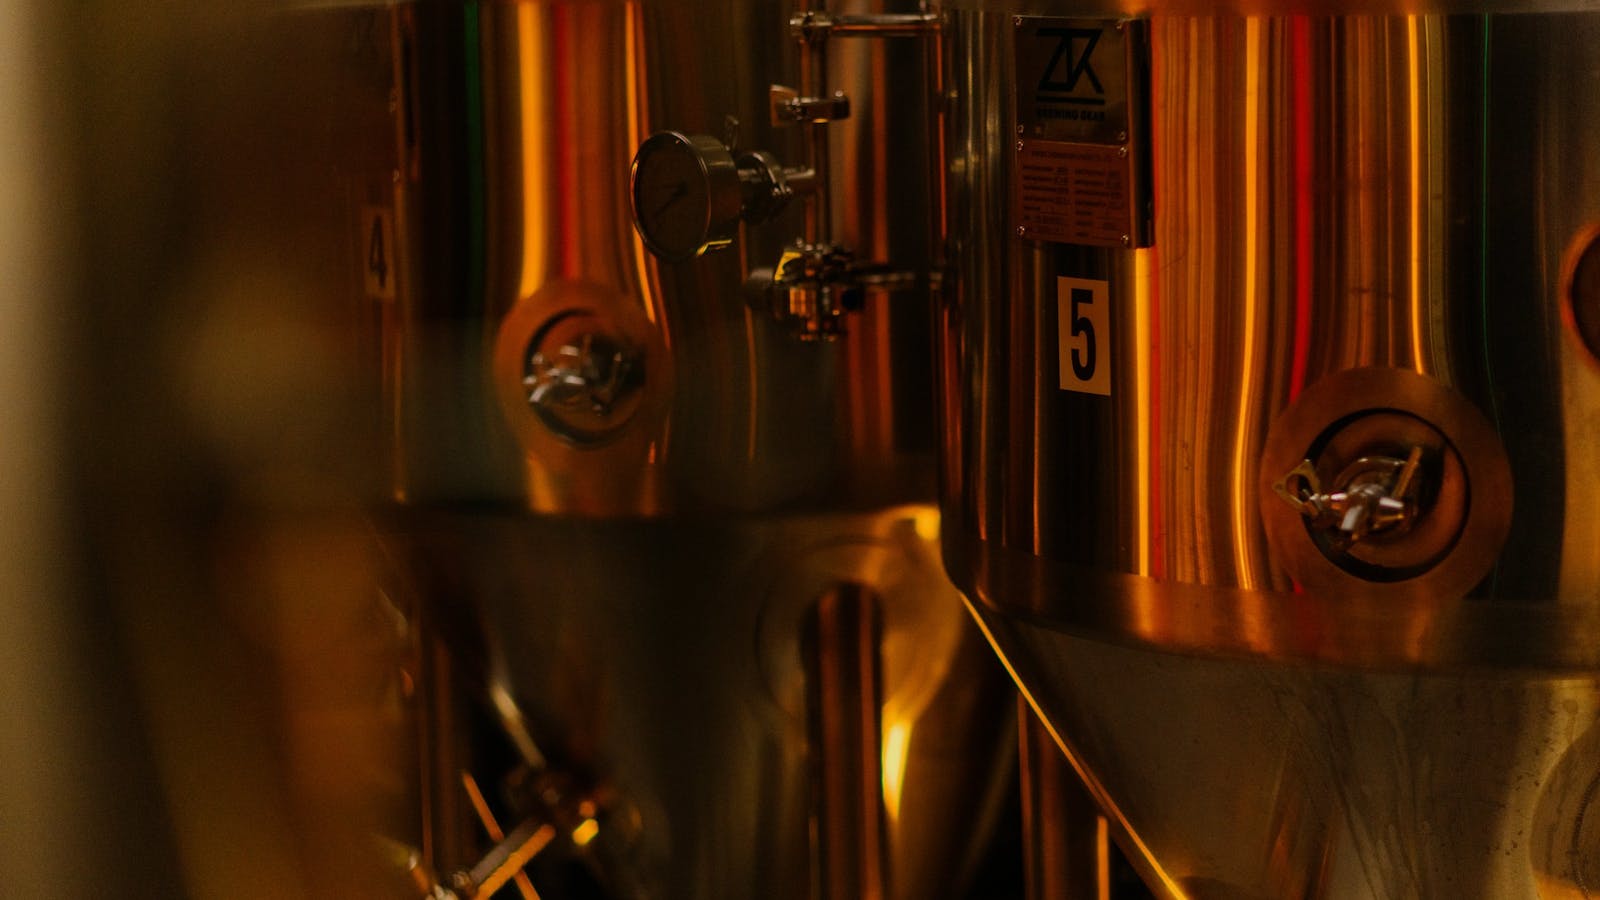 Nano brewery